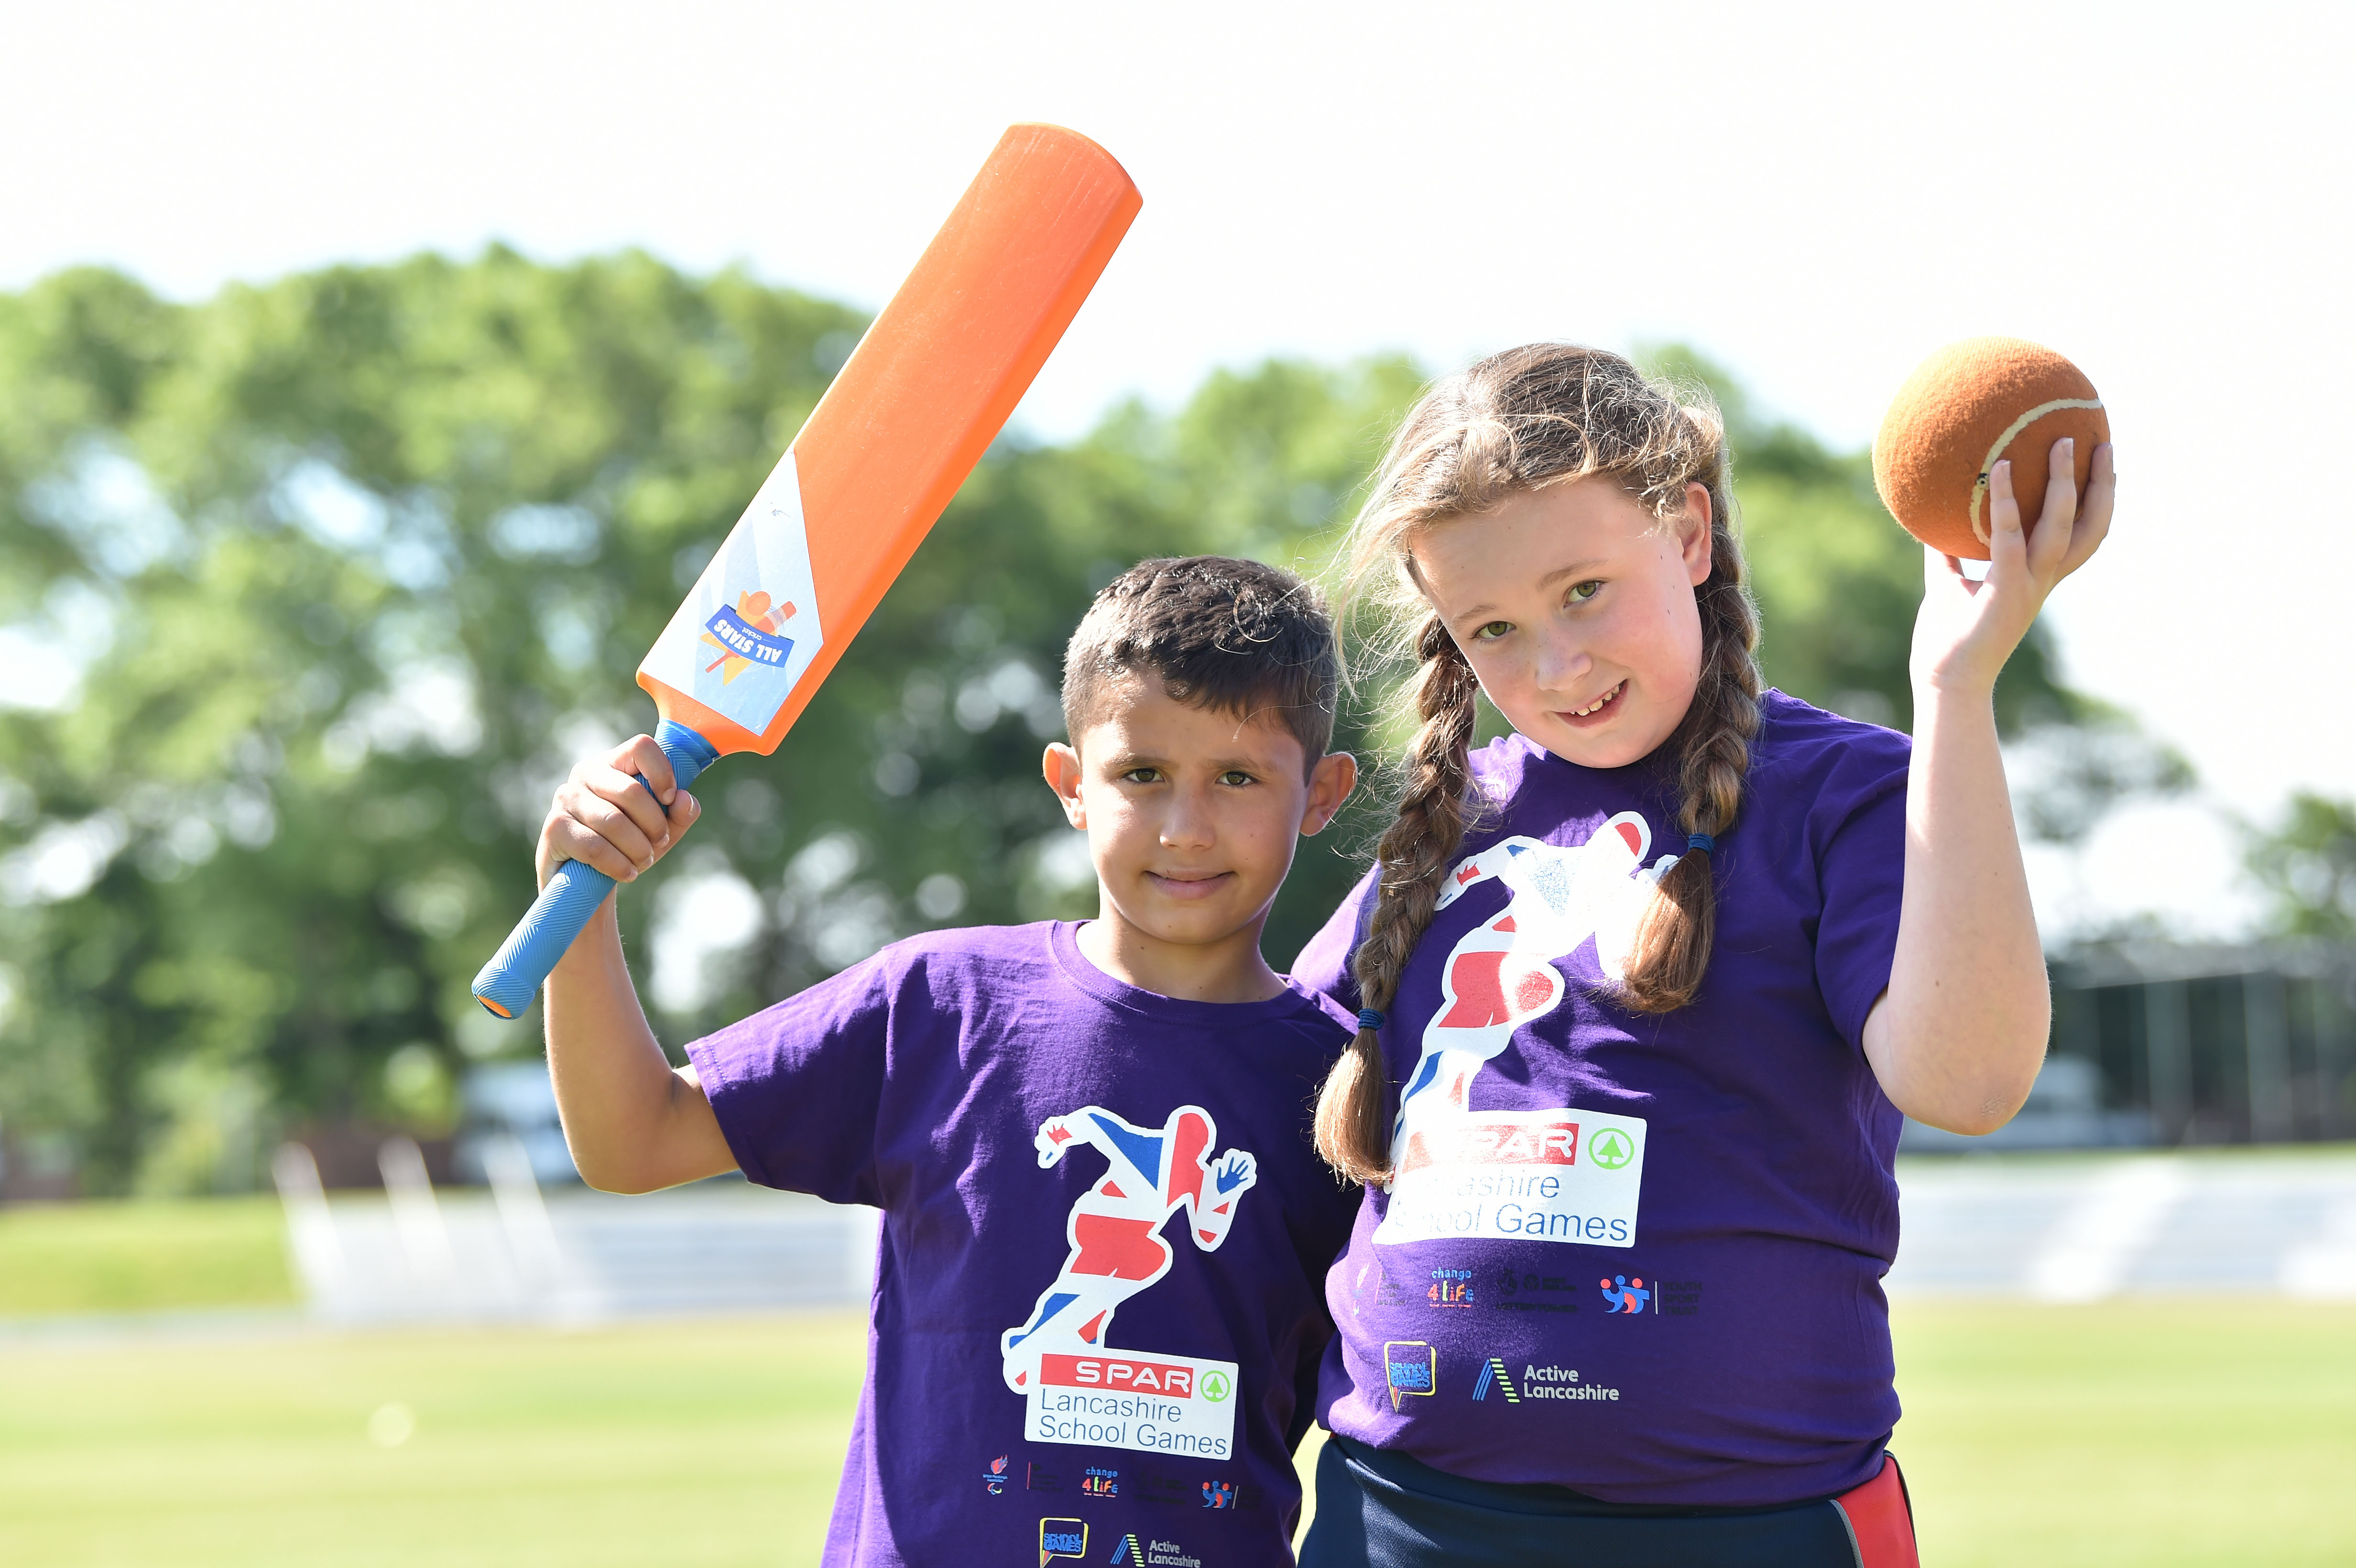 Lancashire School Games - Fleetwood, Nicolas and Sophie Rossall cricket skills